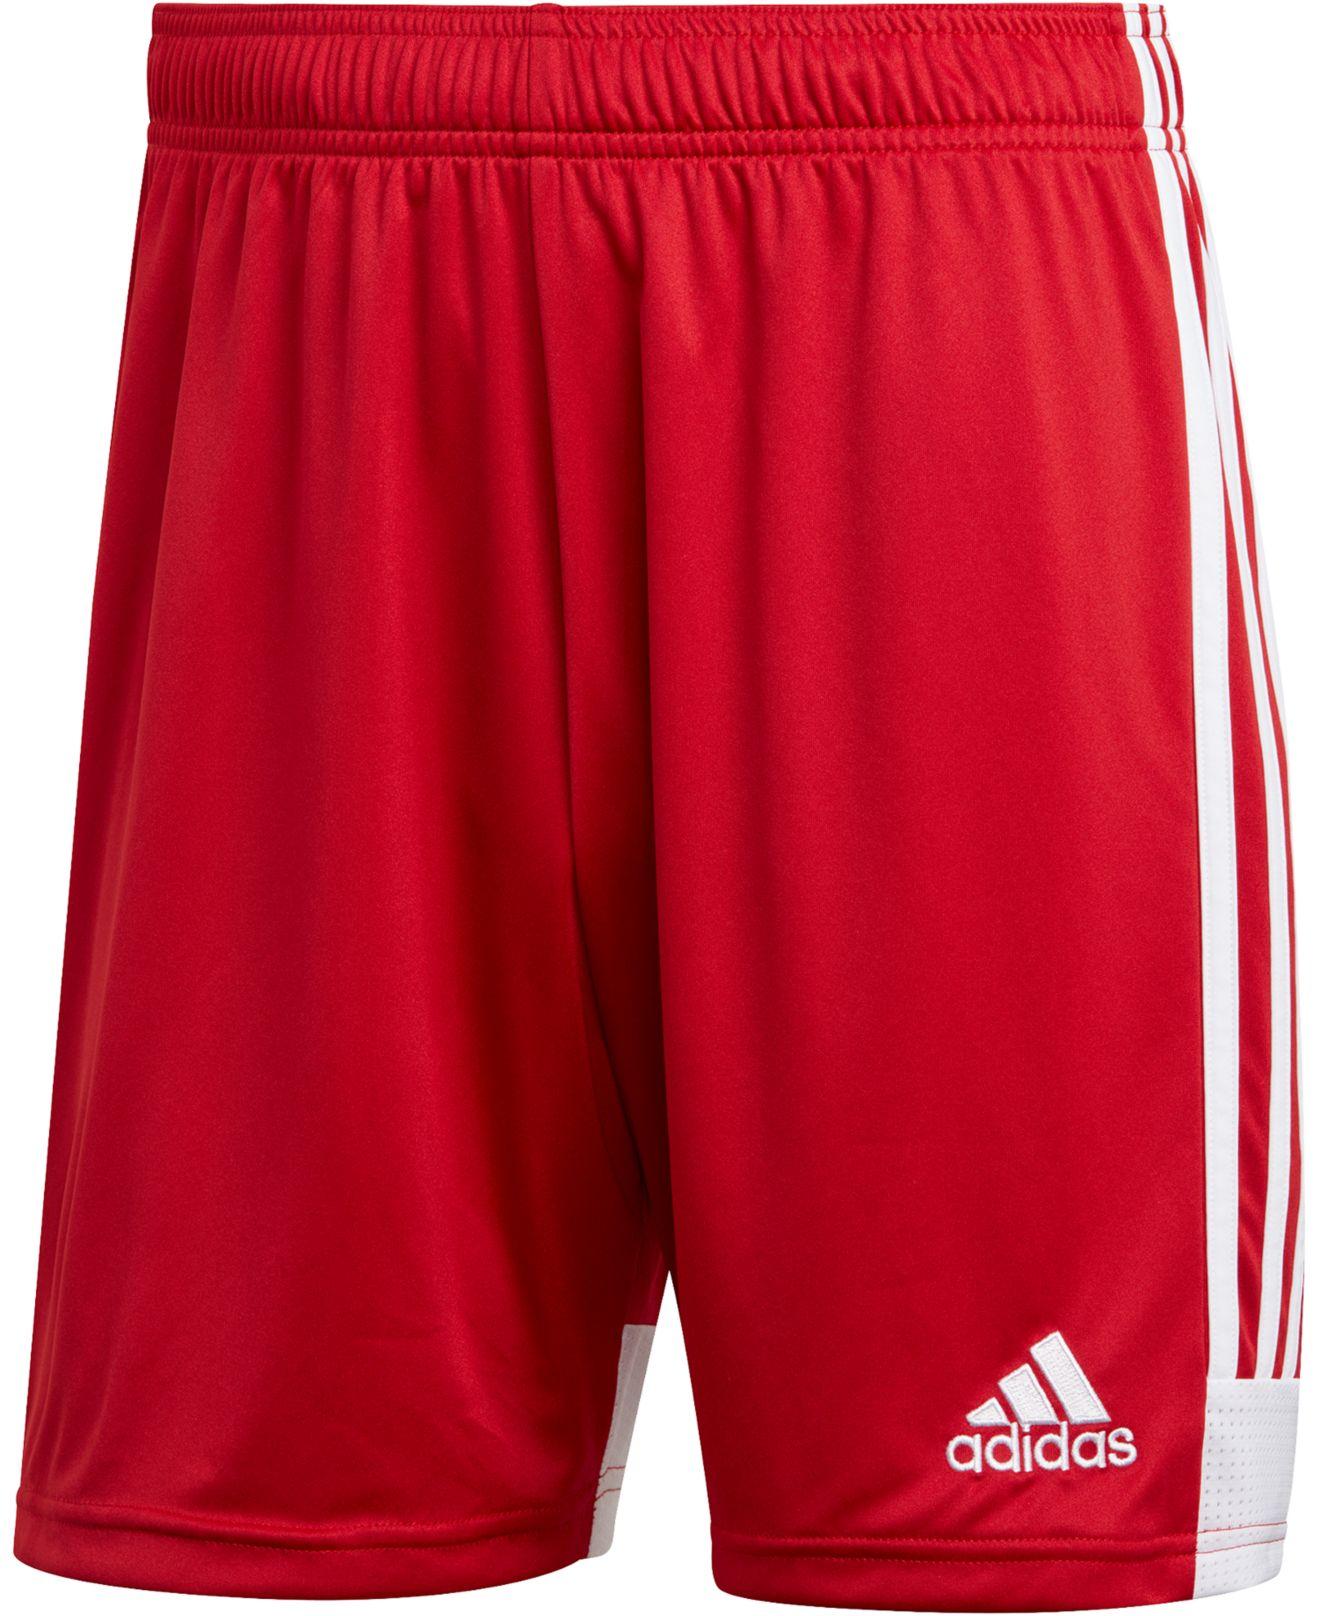 Lyst - adidas Tastigo Climalite® Soccer Shorts in Red for Men